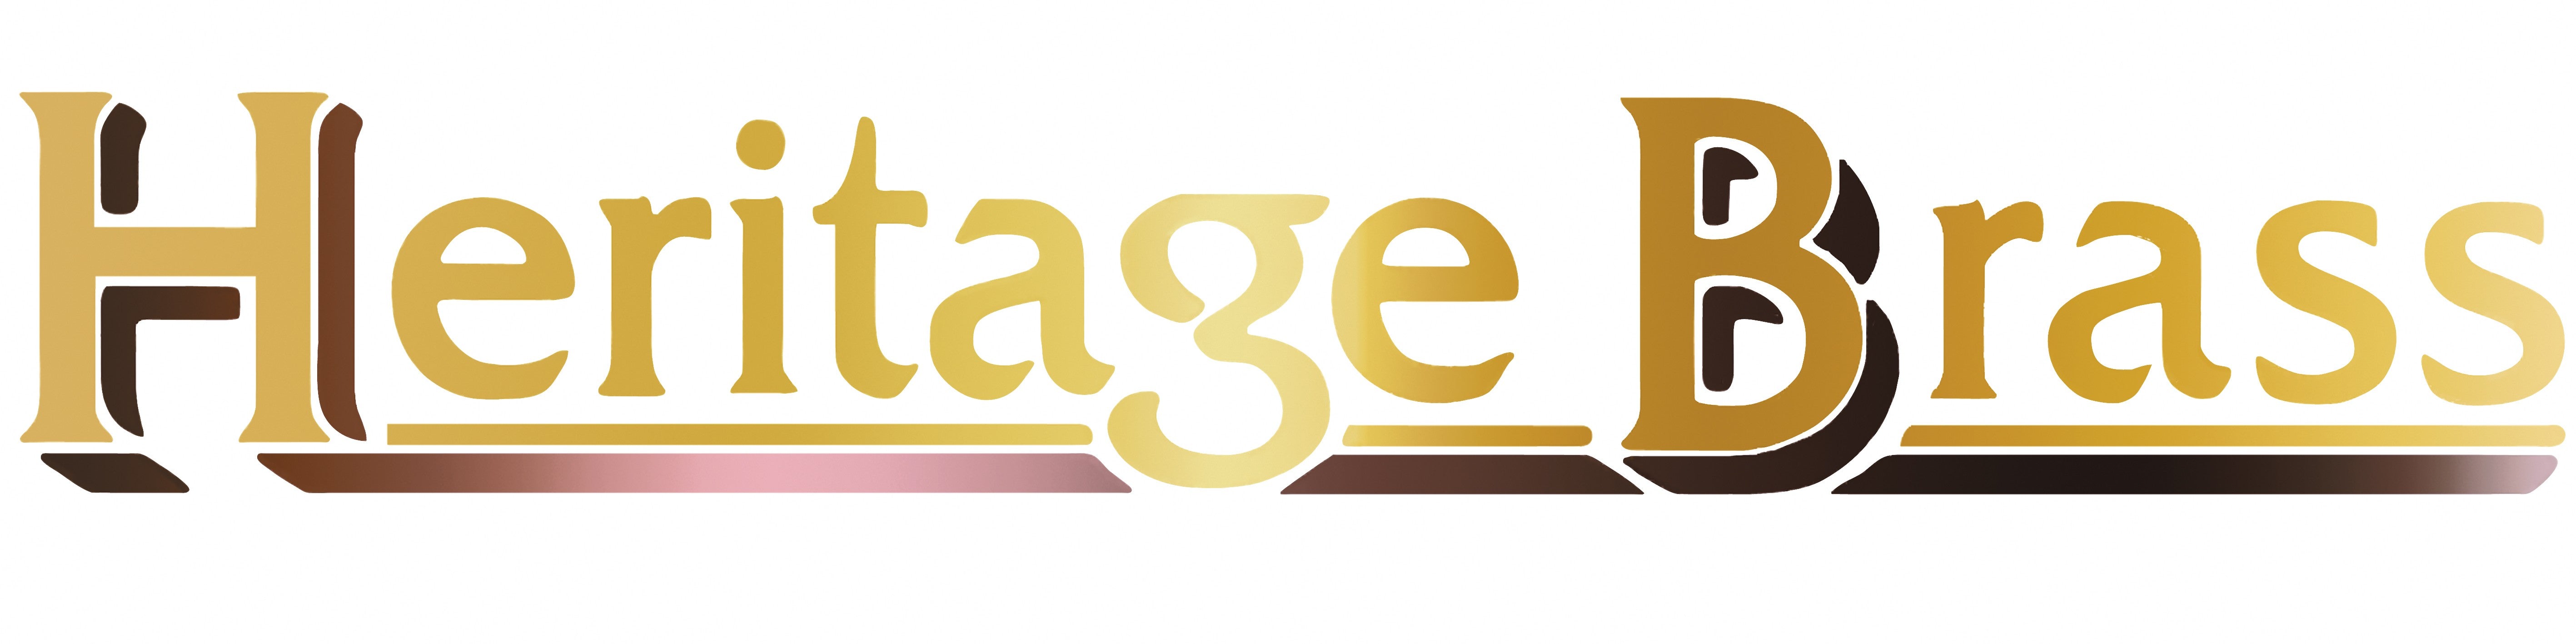 Heritage Brass logo